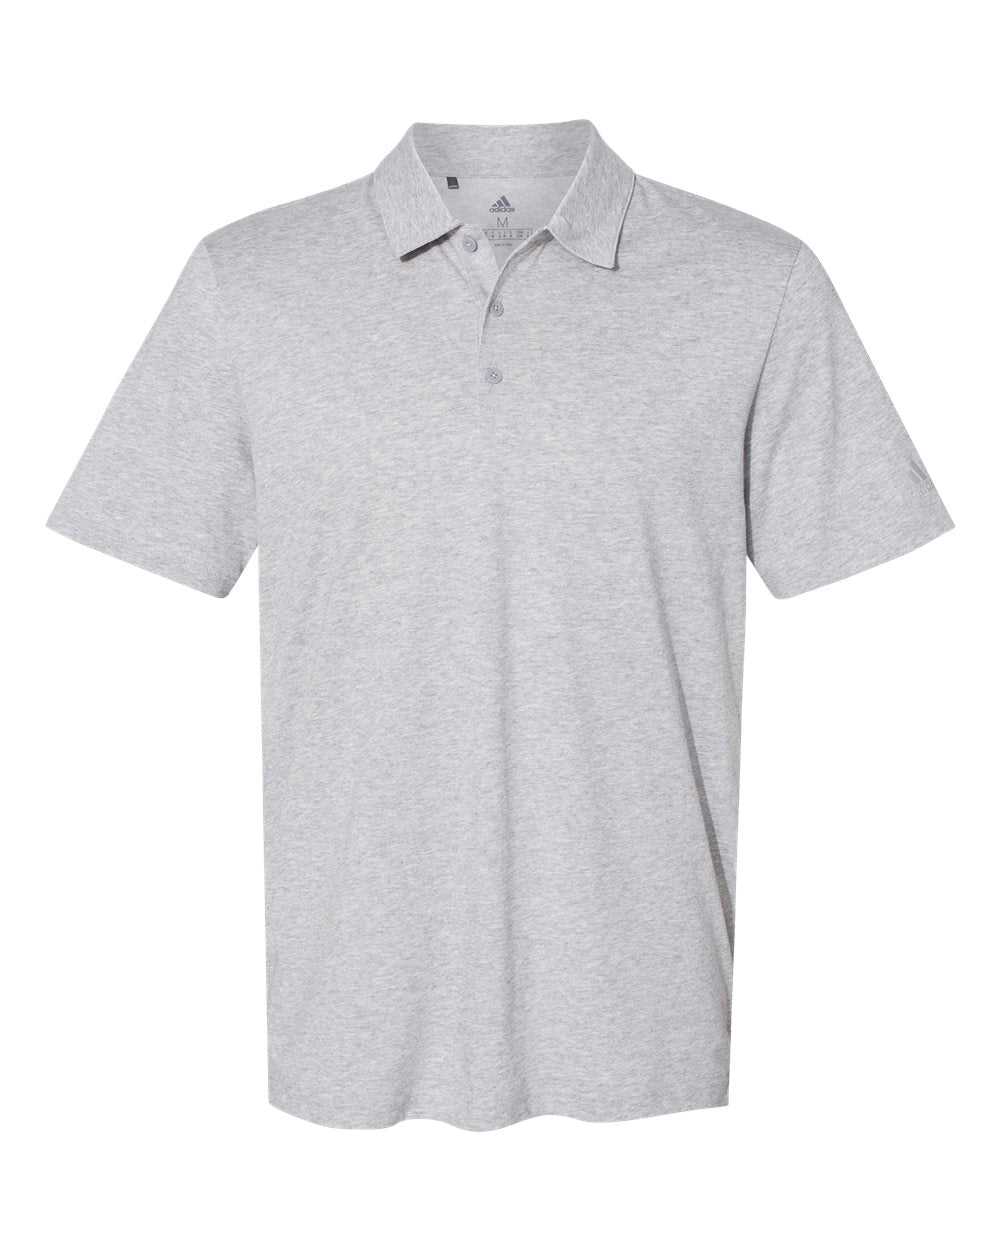 Adidas A322 Cotton Blend Sport Shirt - Medium Grey Heather - HIT a Double